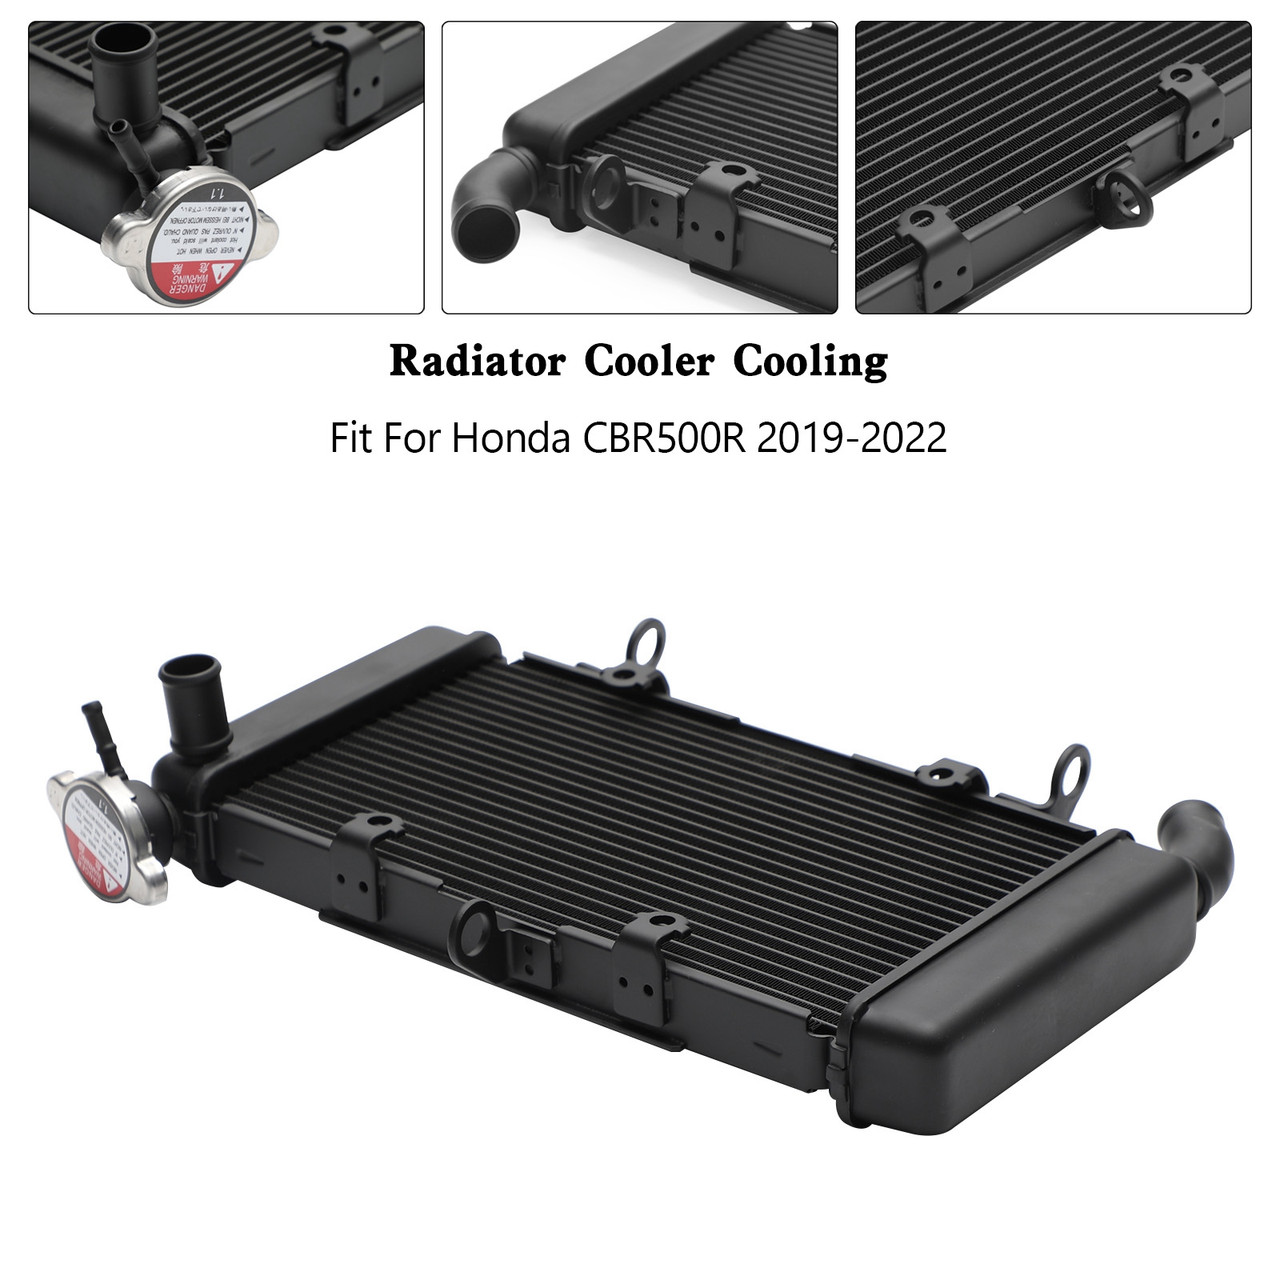 Aluminum Radiator Cooling Cooler For Honda CBR500R CBR 500 R 2019-2022